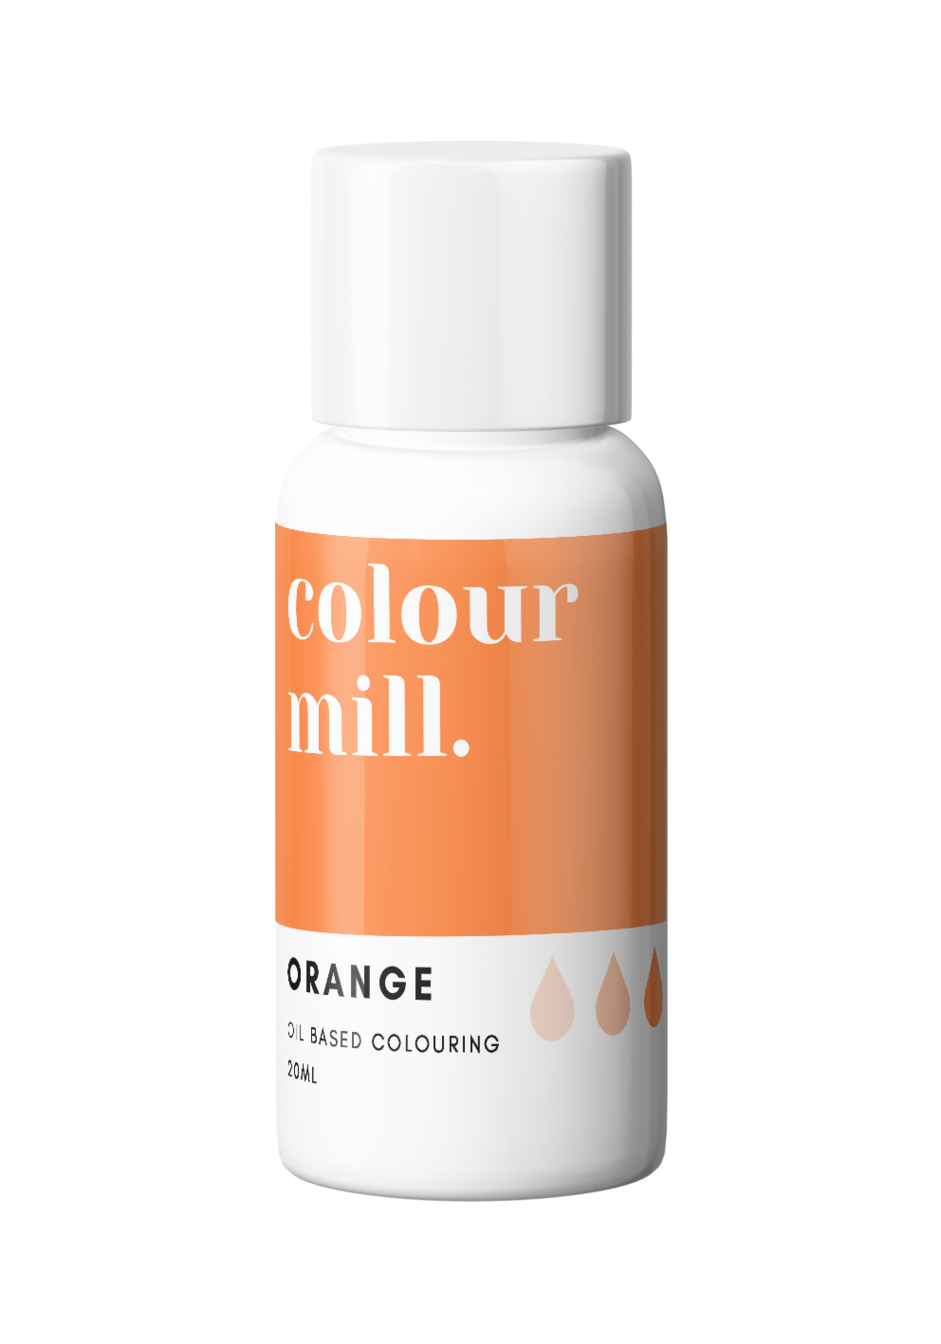 Orange, 20ml, Colour Mill Oil Based Colouring